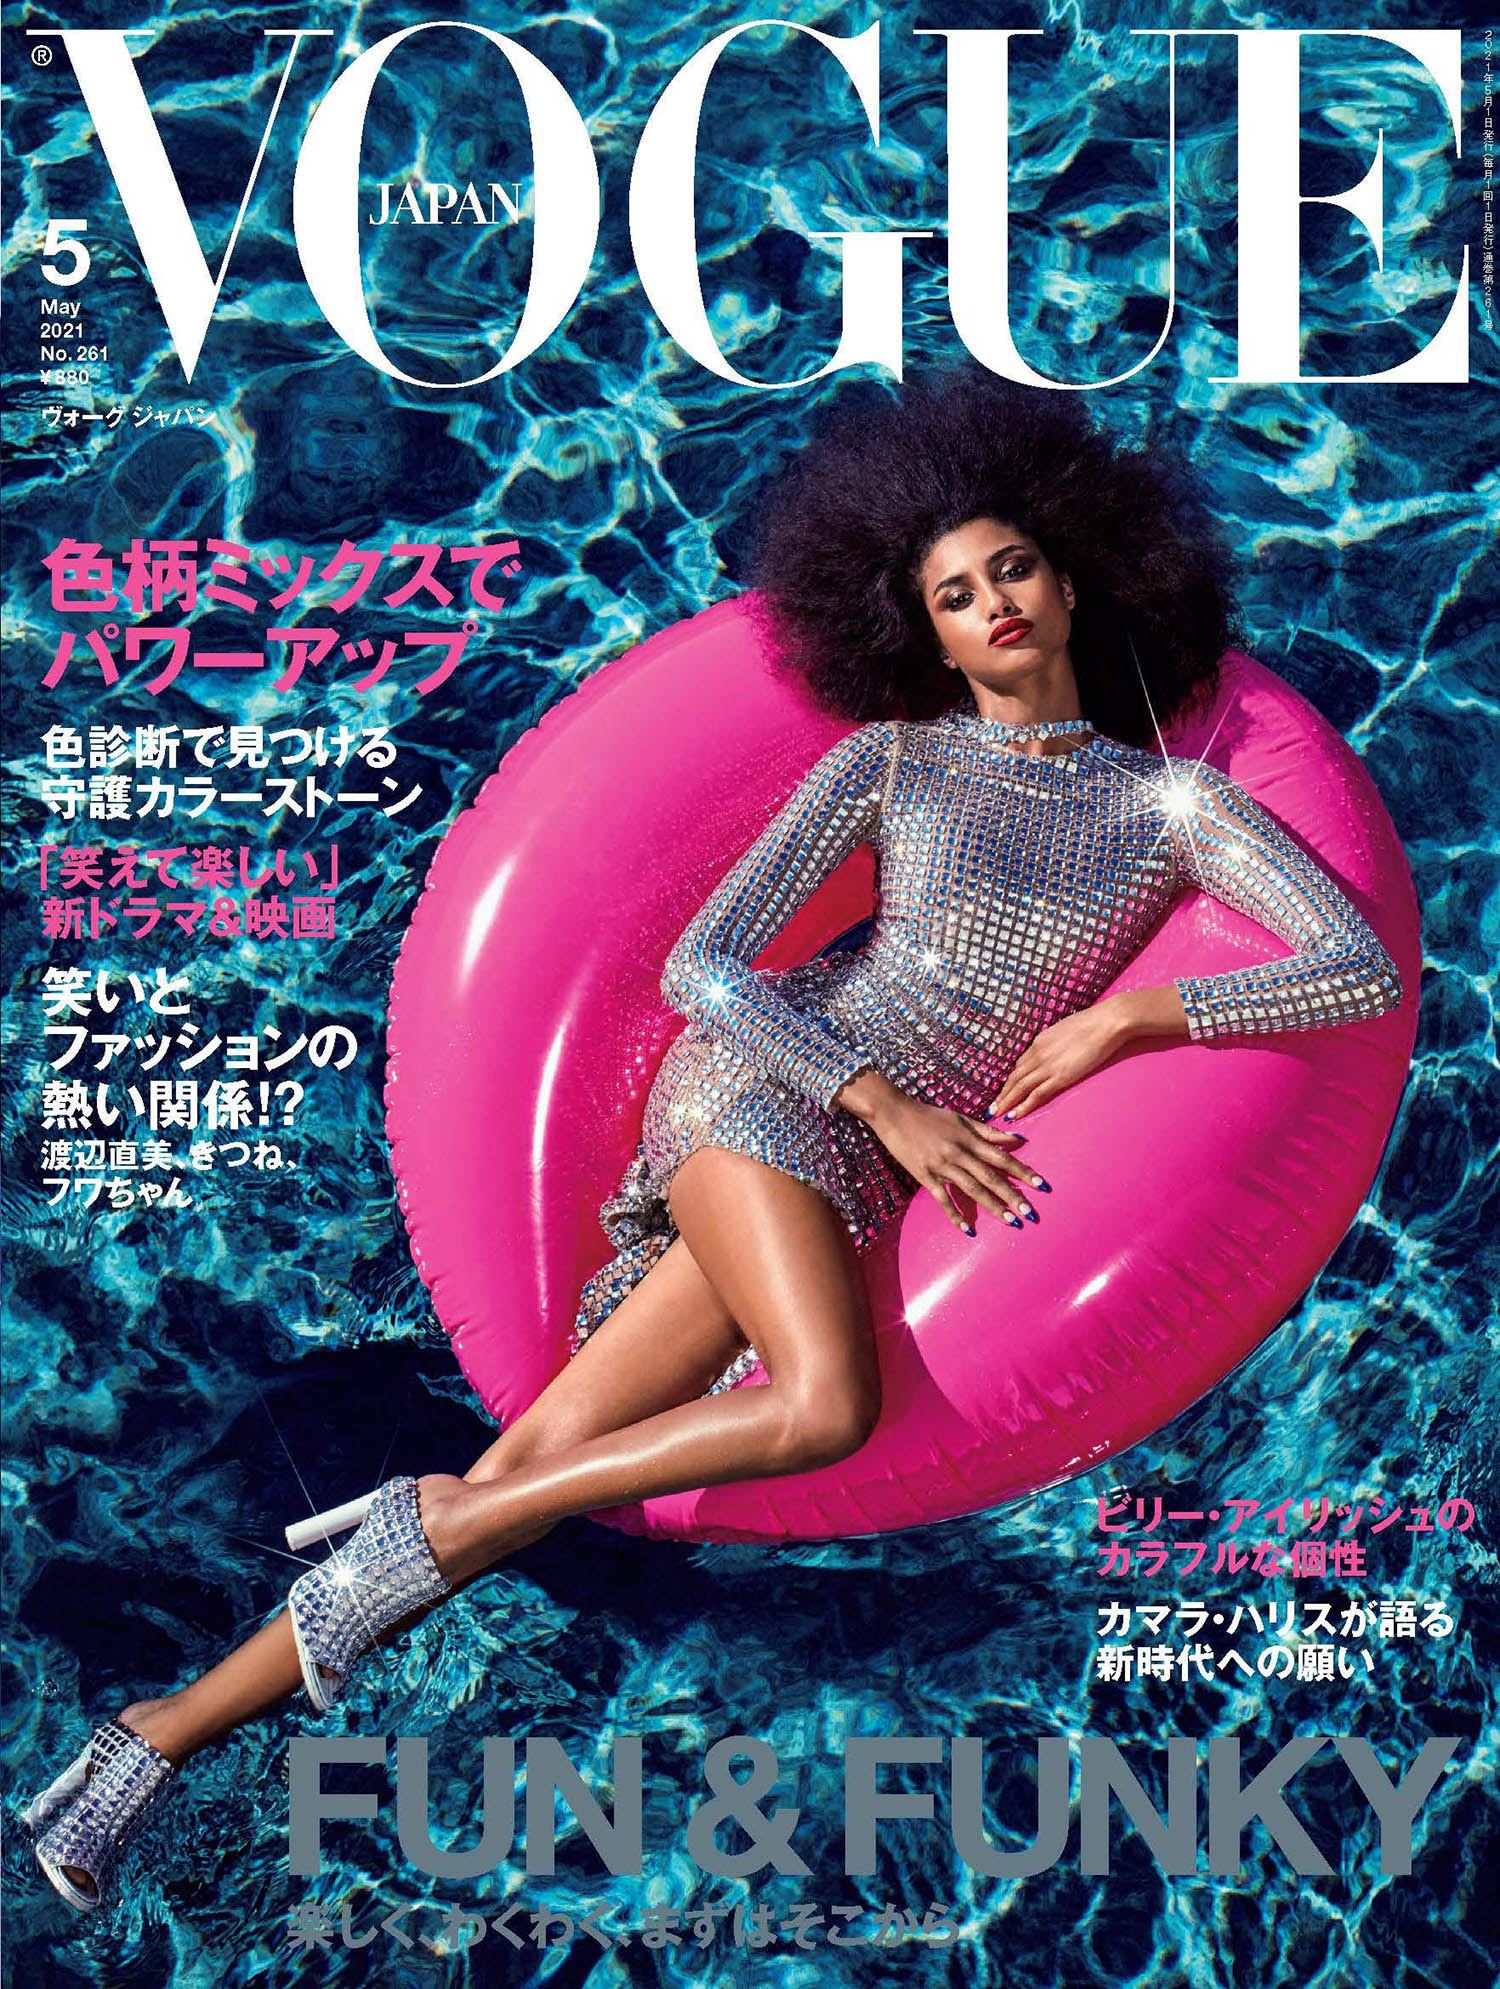 Imaan Hammam covers Vogue Japan May 2021 by Luigi & Iango